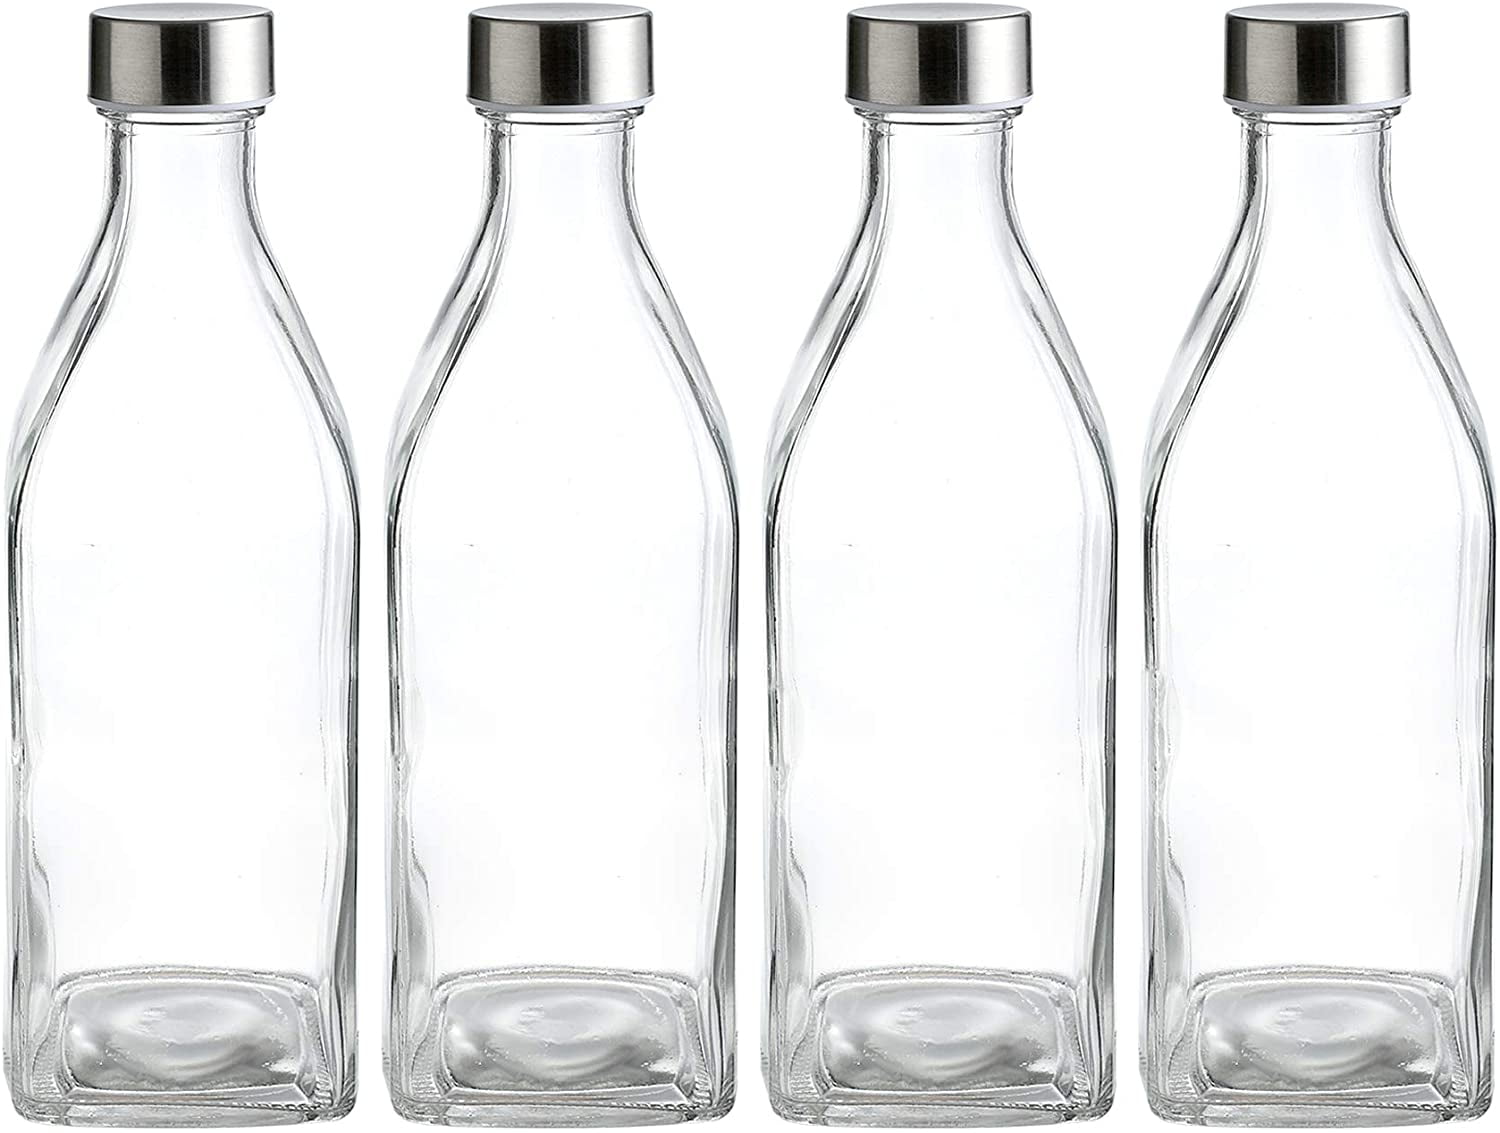 34 oz Clear PET Plastic Water Bottles - 4691B28-B